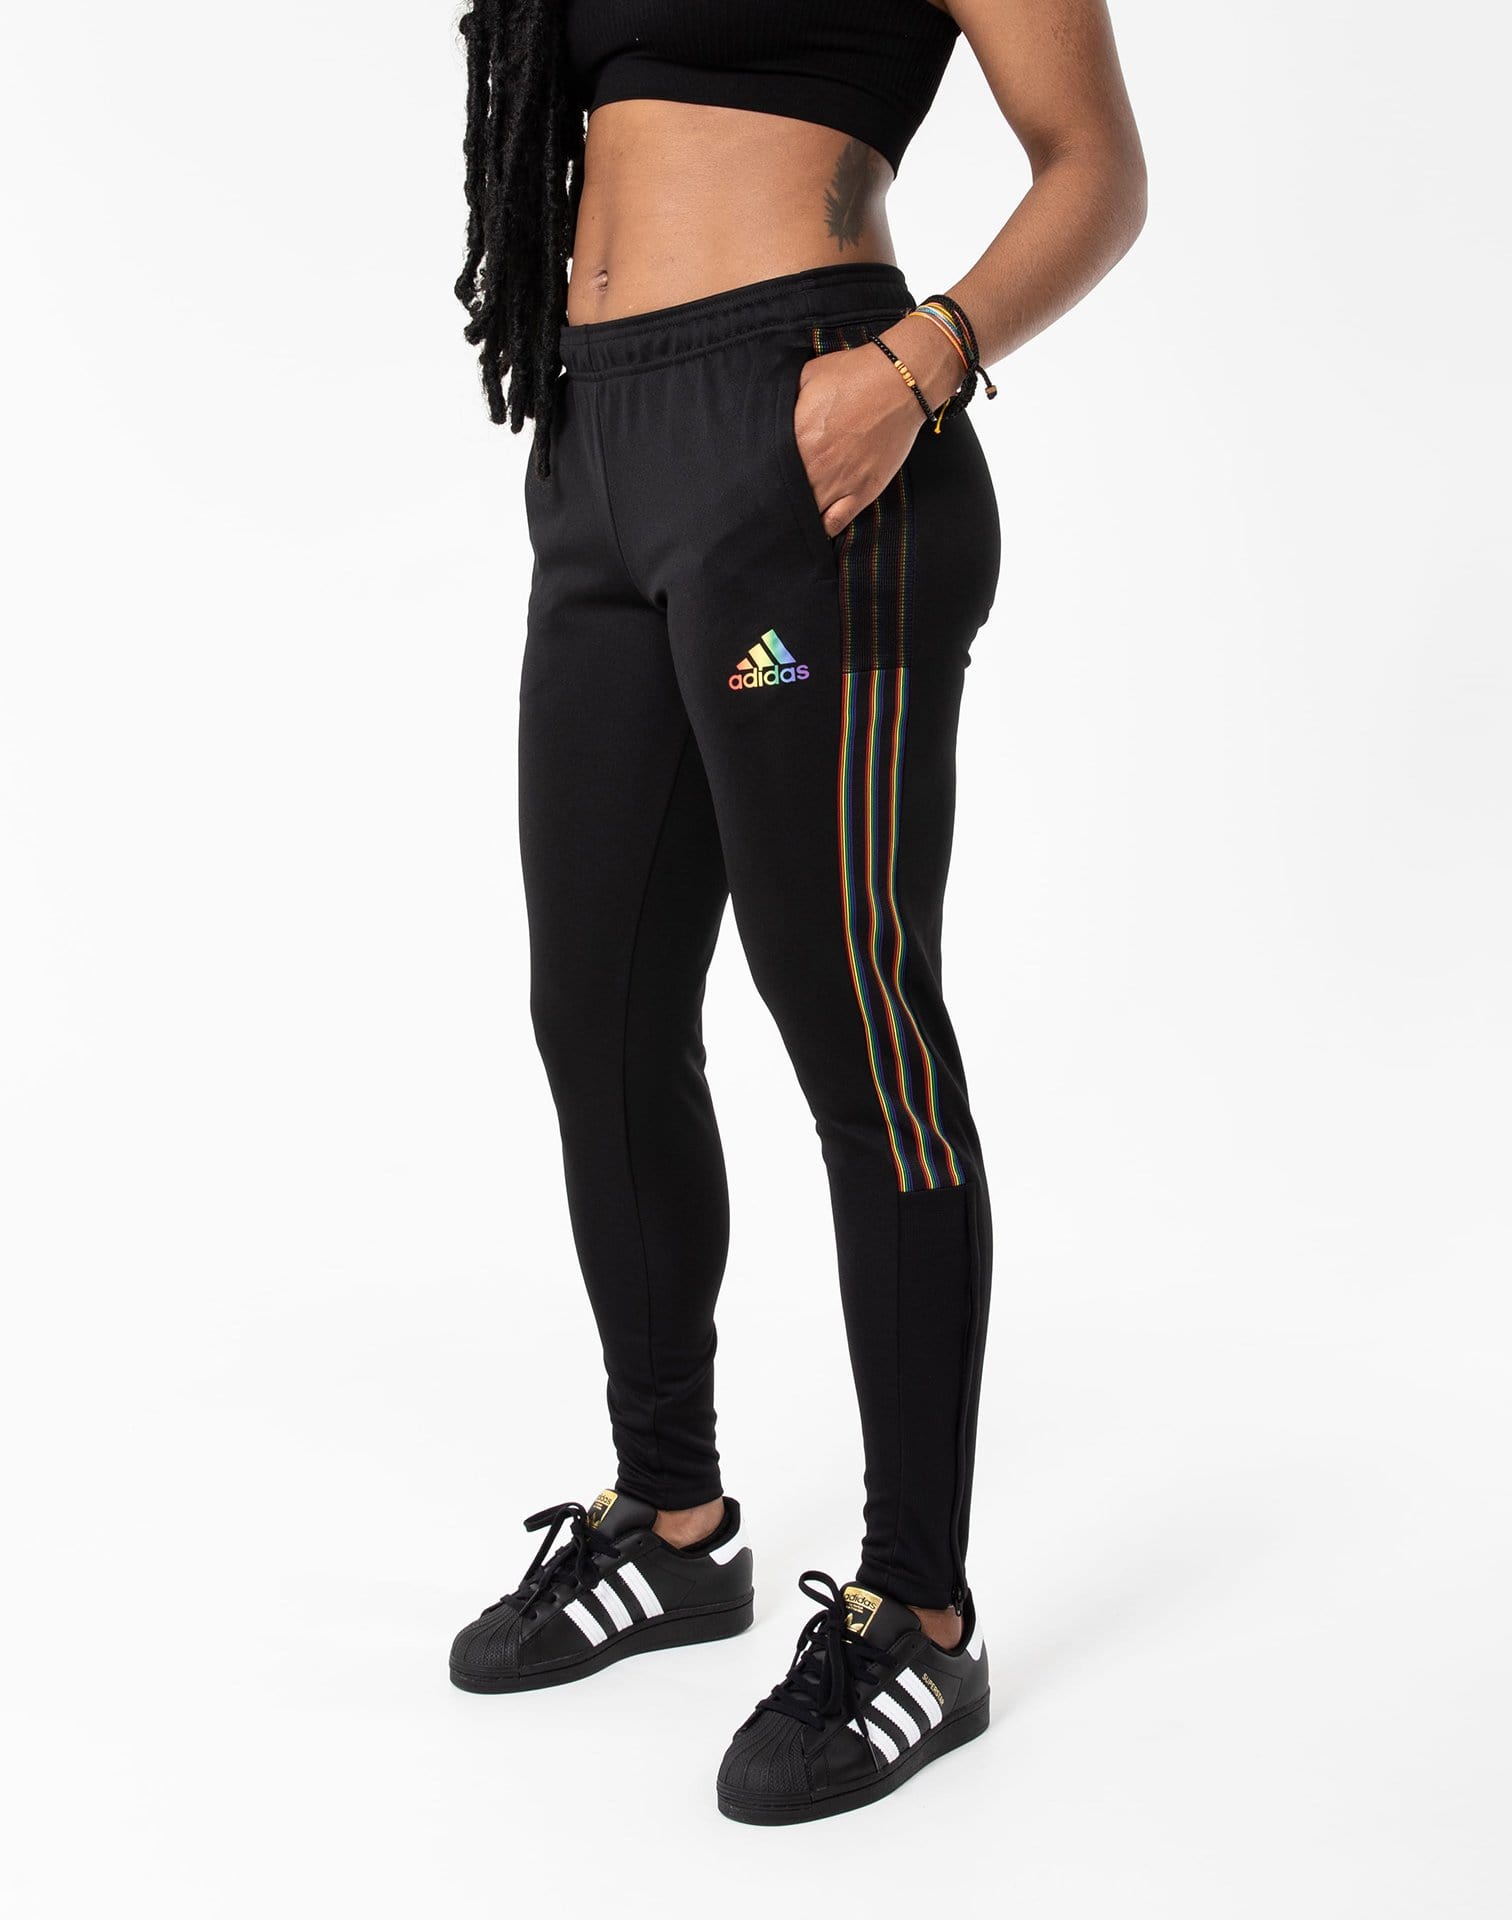 adidas Women's Standard Tiro Track Pants, Black/Wild Pink, Large 